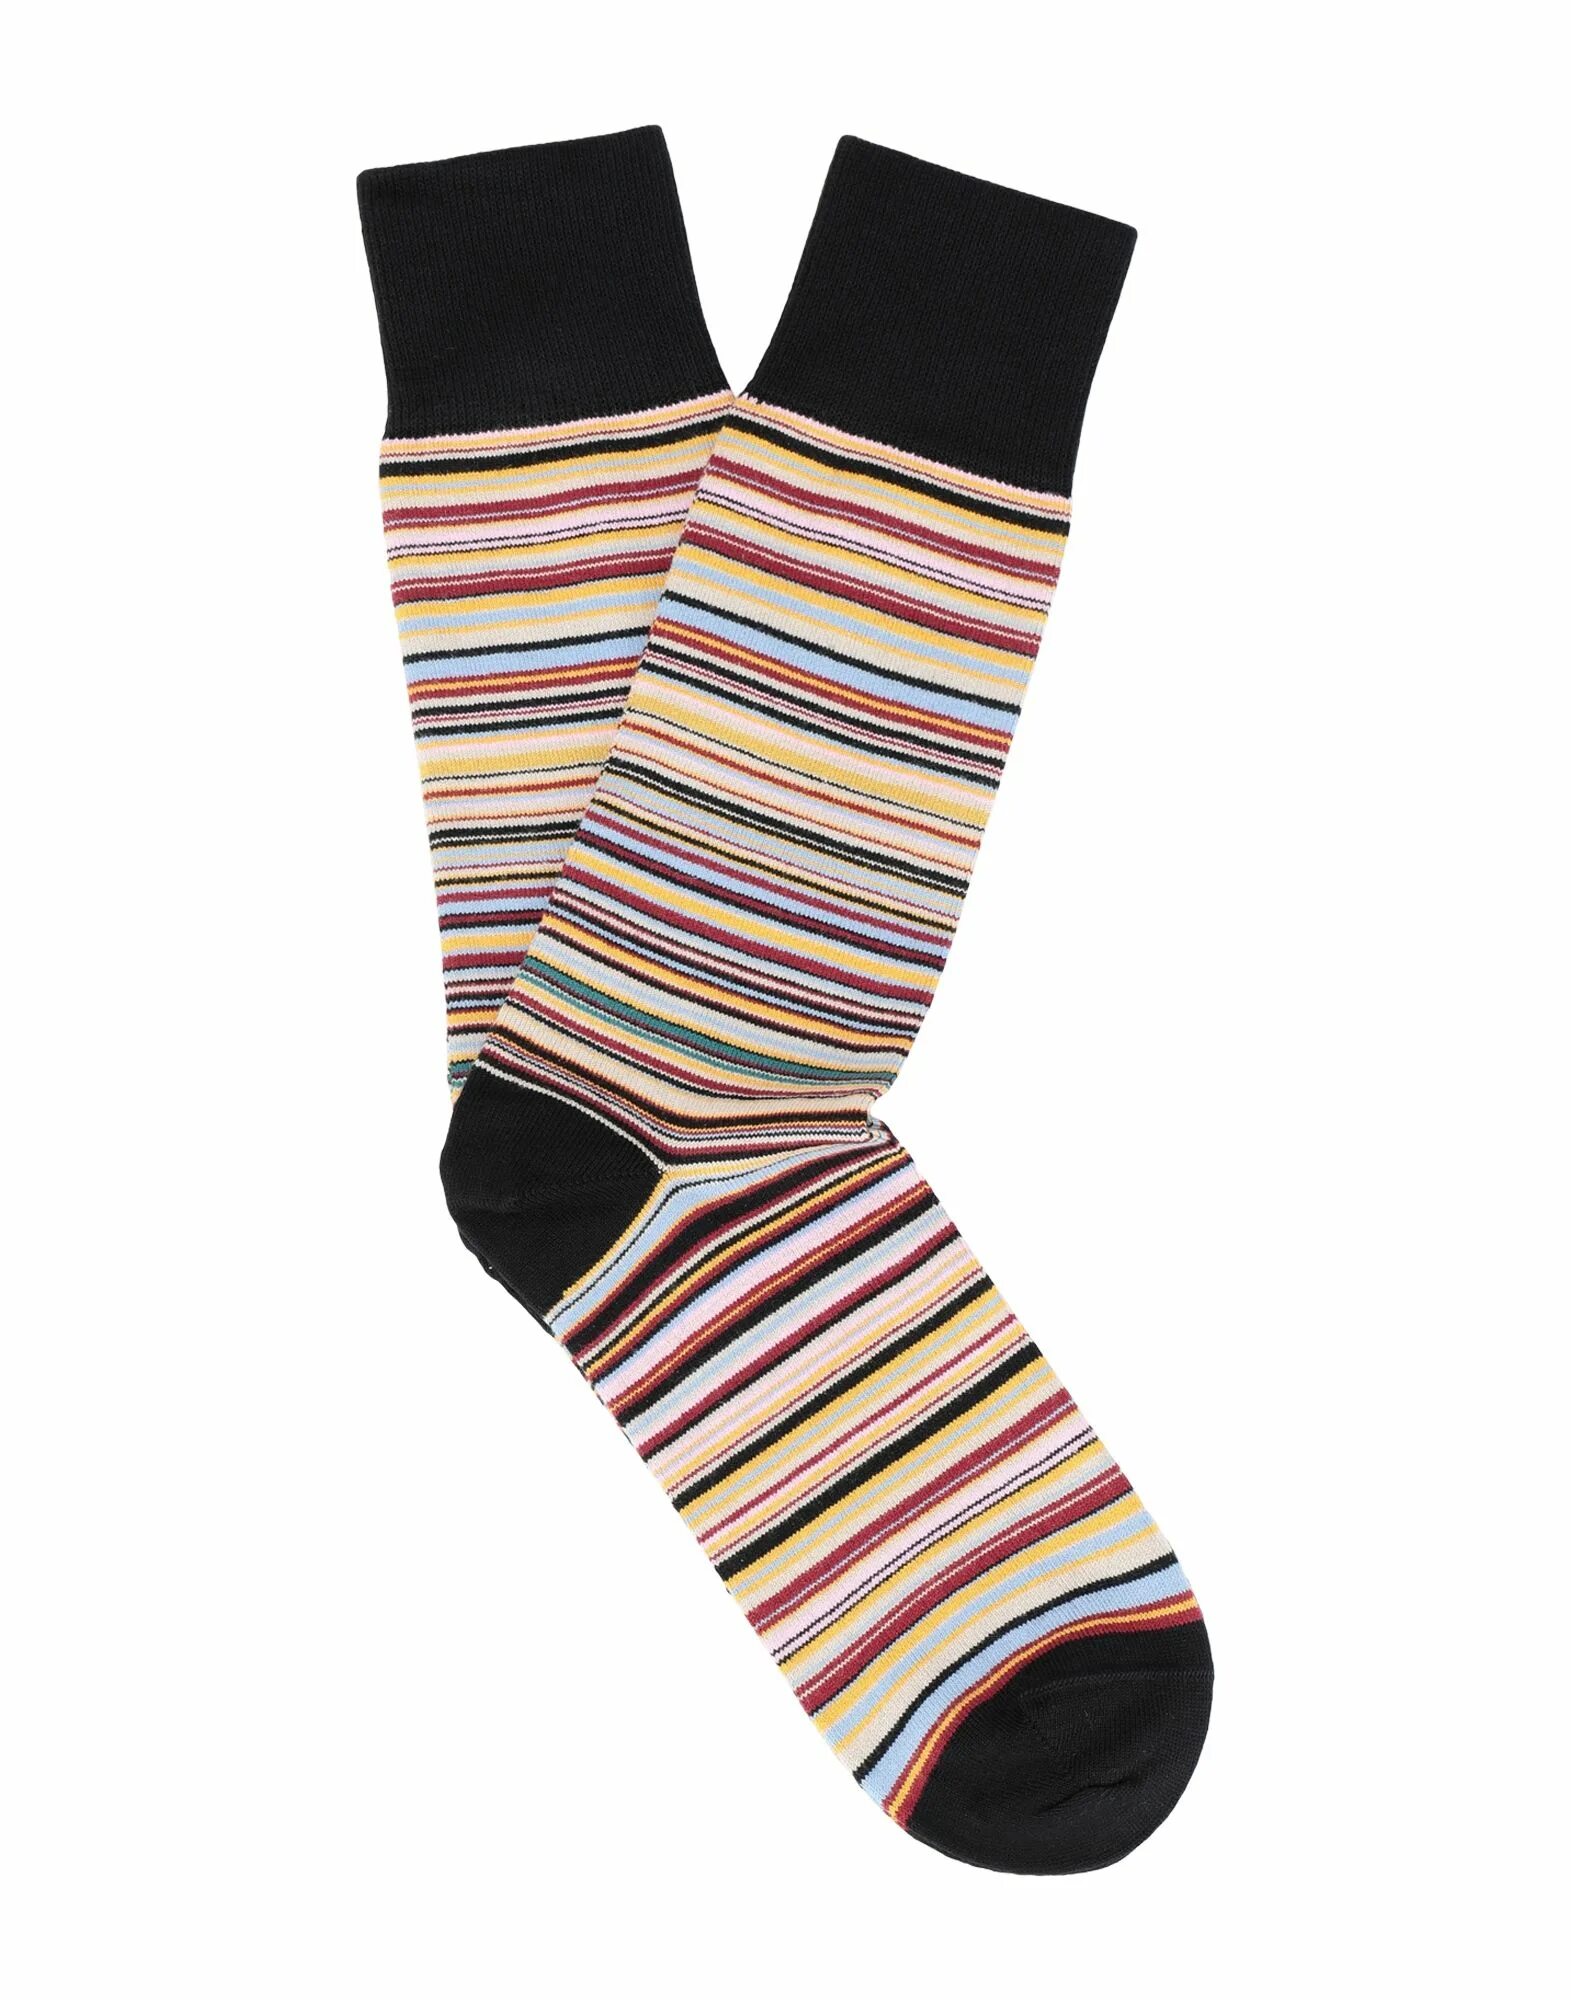 Пауль Смит носки. Paul Smith Signature Stripe Socks. Носки мужские YOOX. Носки в полоску.